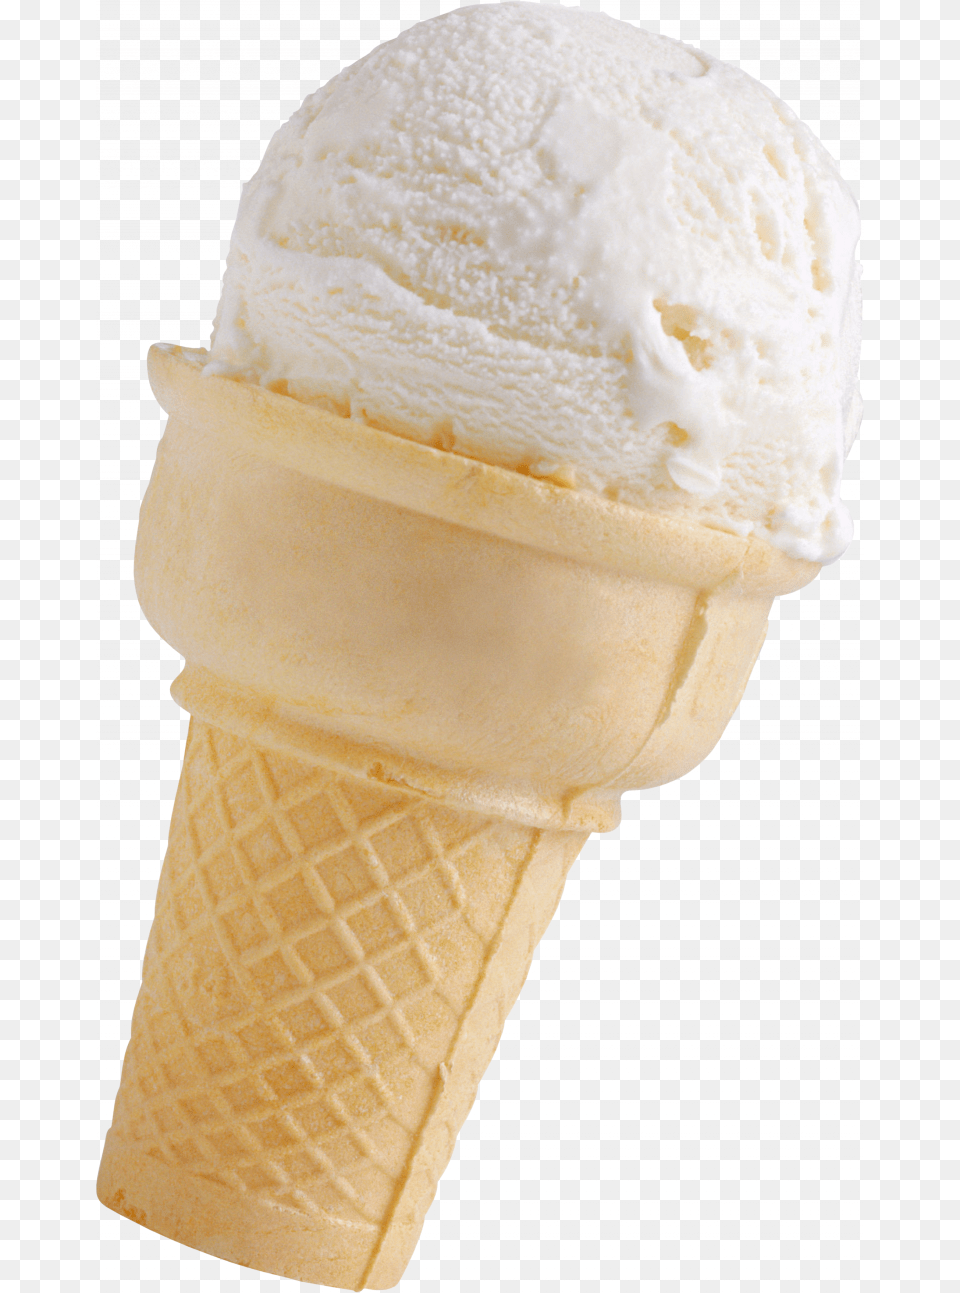 Now You Can Download Ice Cream Vanilla Ice Cream Transparent Background, Dessert, Food, Ice Cream, Soft Serve Ice Cream Png